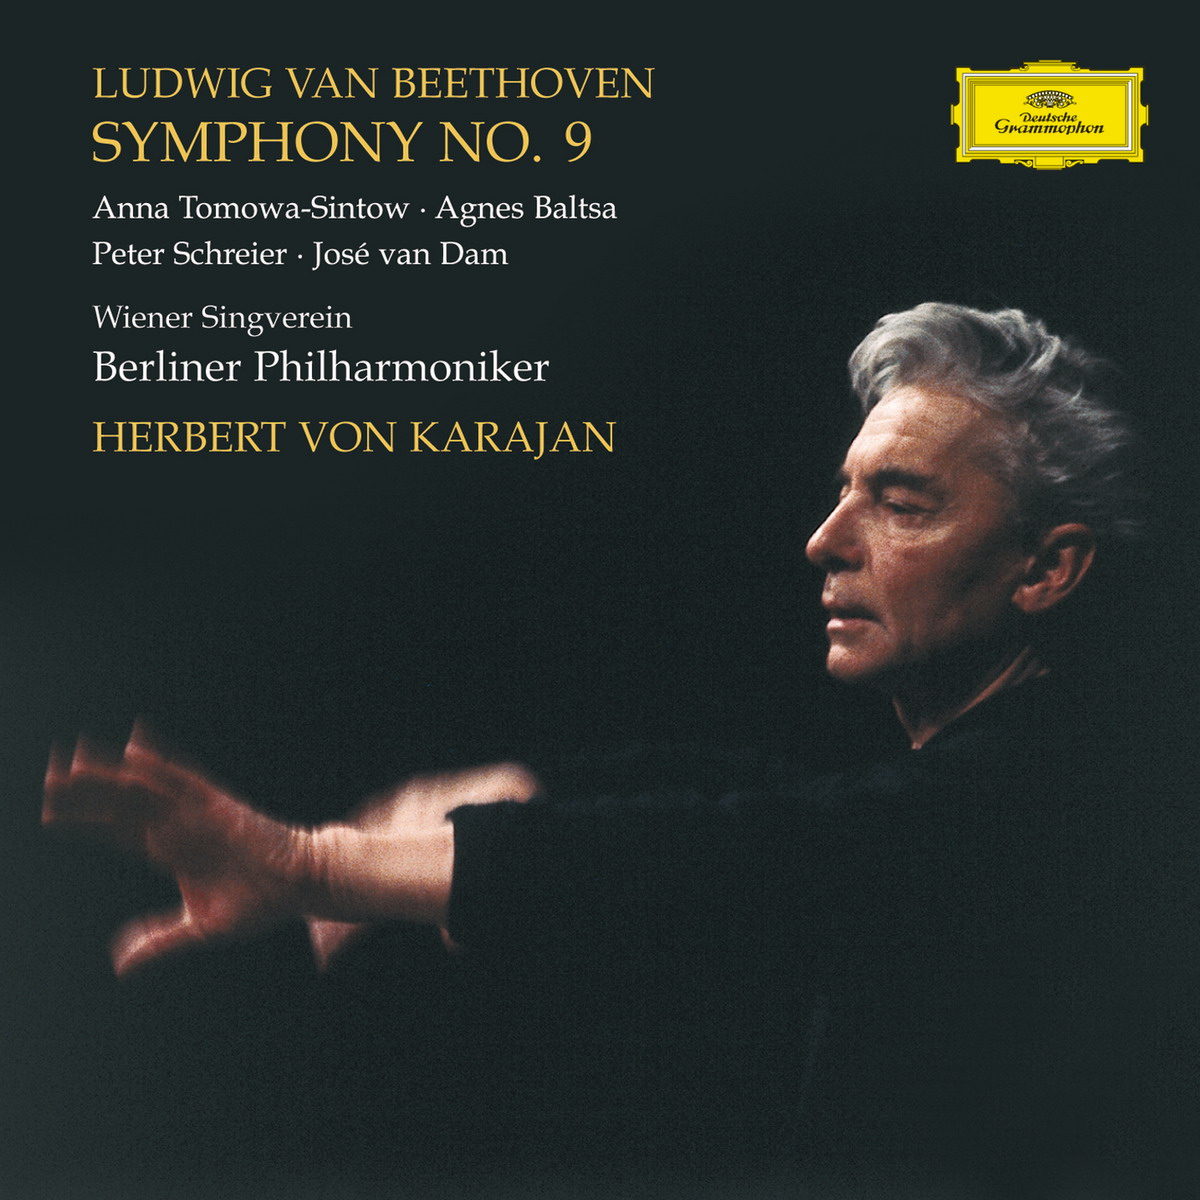 Ludwig van Beethoven Symphony No. 9 - Wiener Singverein, Berlin Philharmonic Orchestra & Herbert von Karajan (1976/2012) [e-Onkyo FLAC 24bit/96kHz]